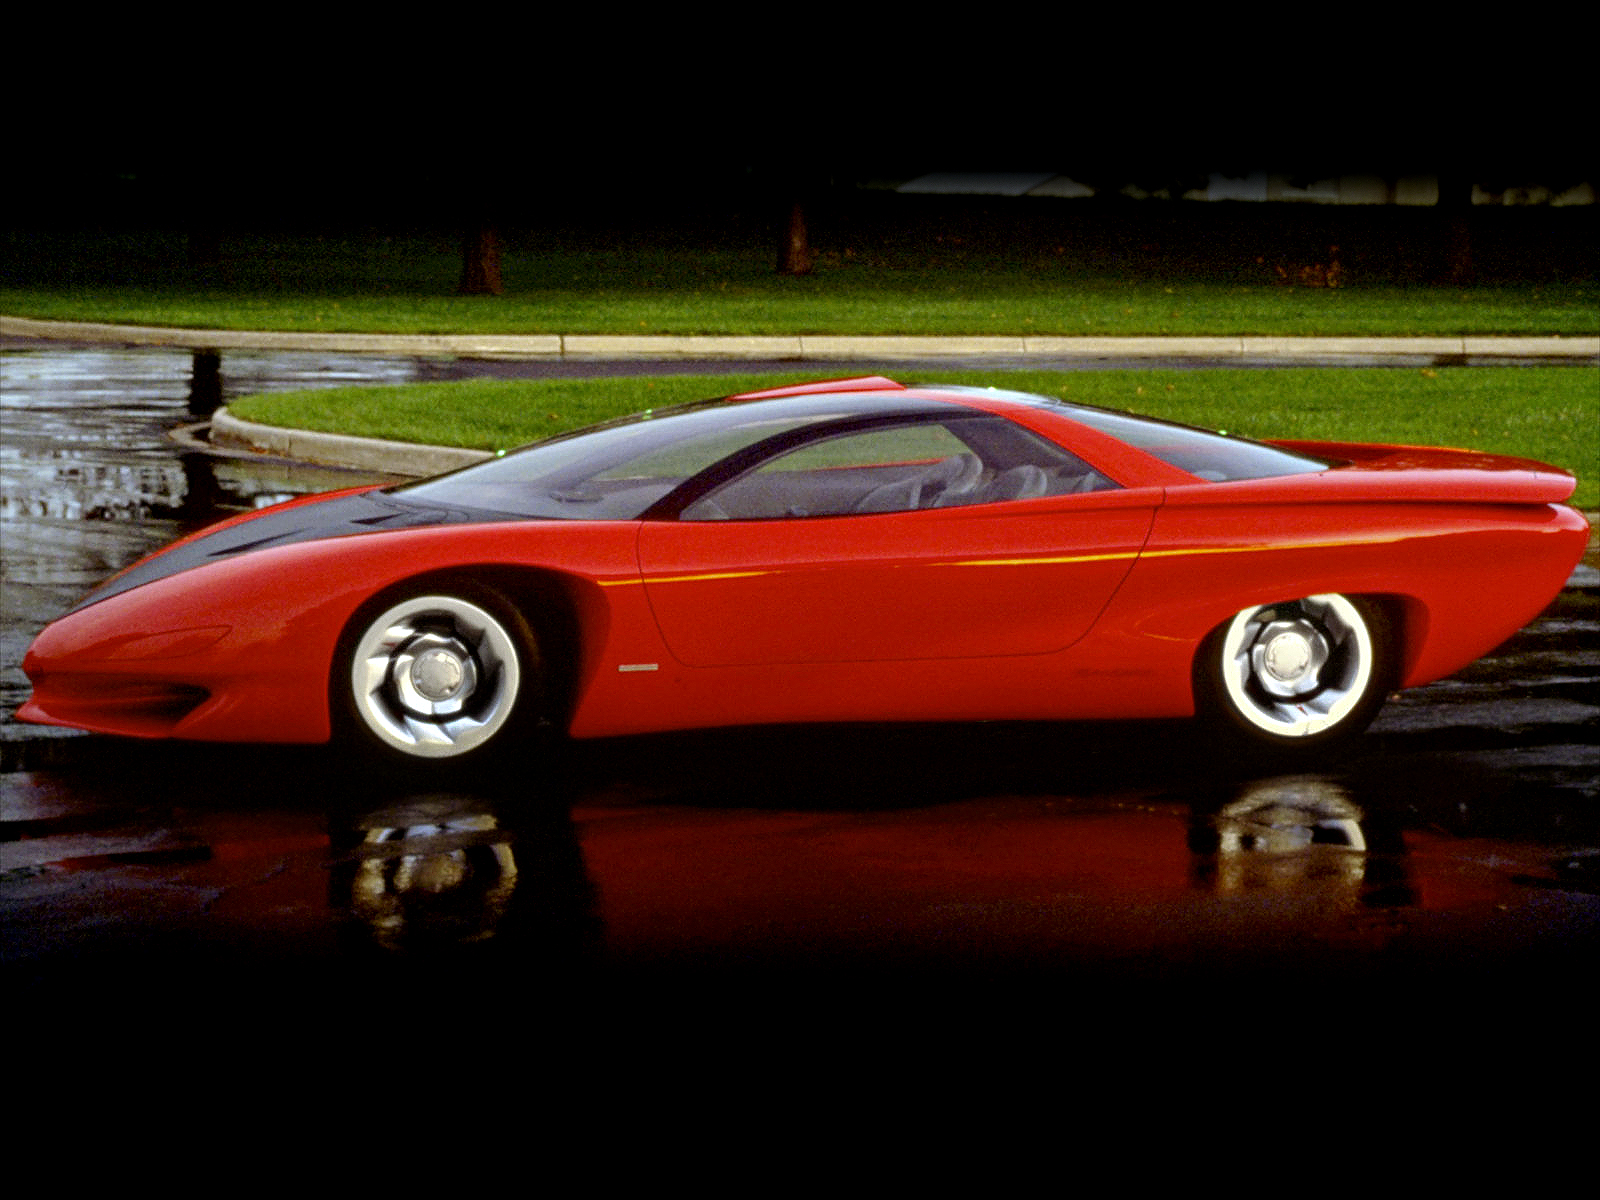 Pontiac Banshee IV Concept Car side